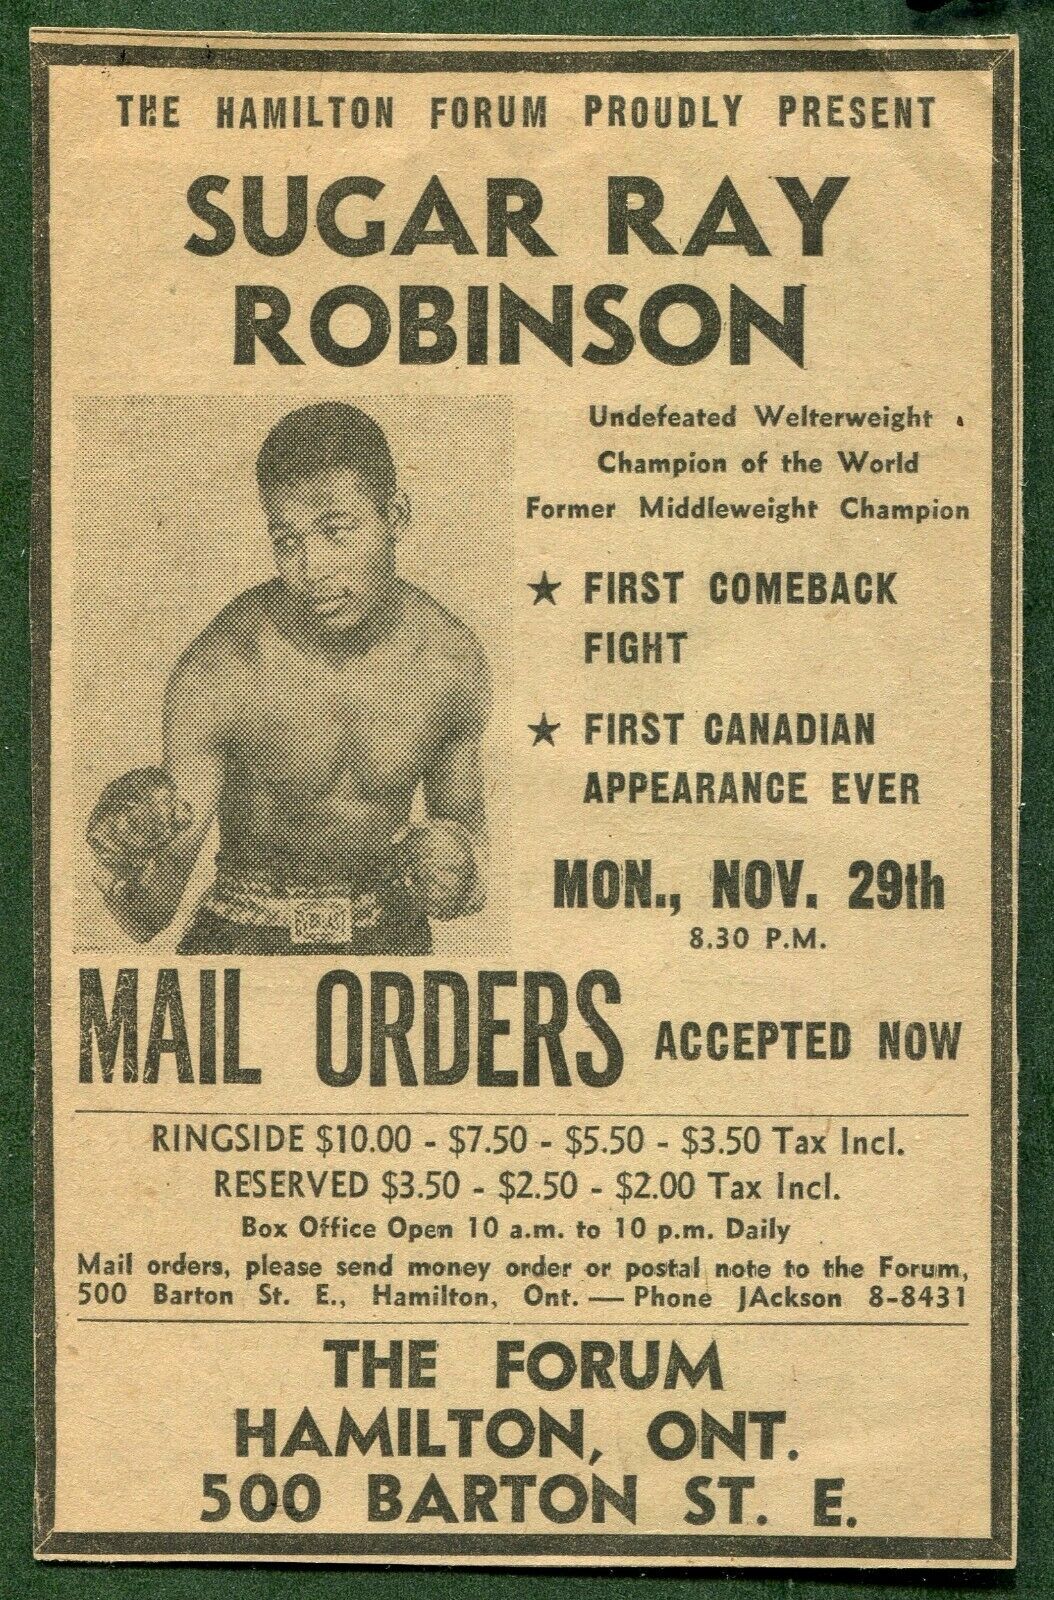 1954 Sugar Ray Robinson Fight Ticket, Card And Ad From Hamilton, Ontario